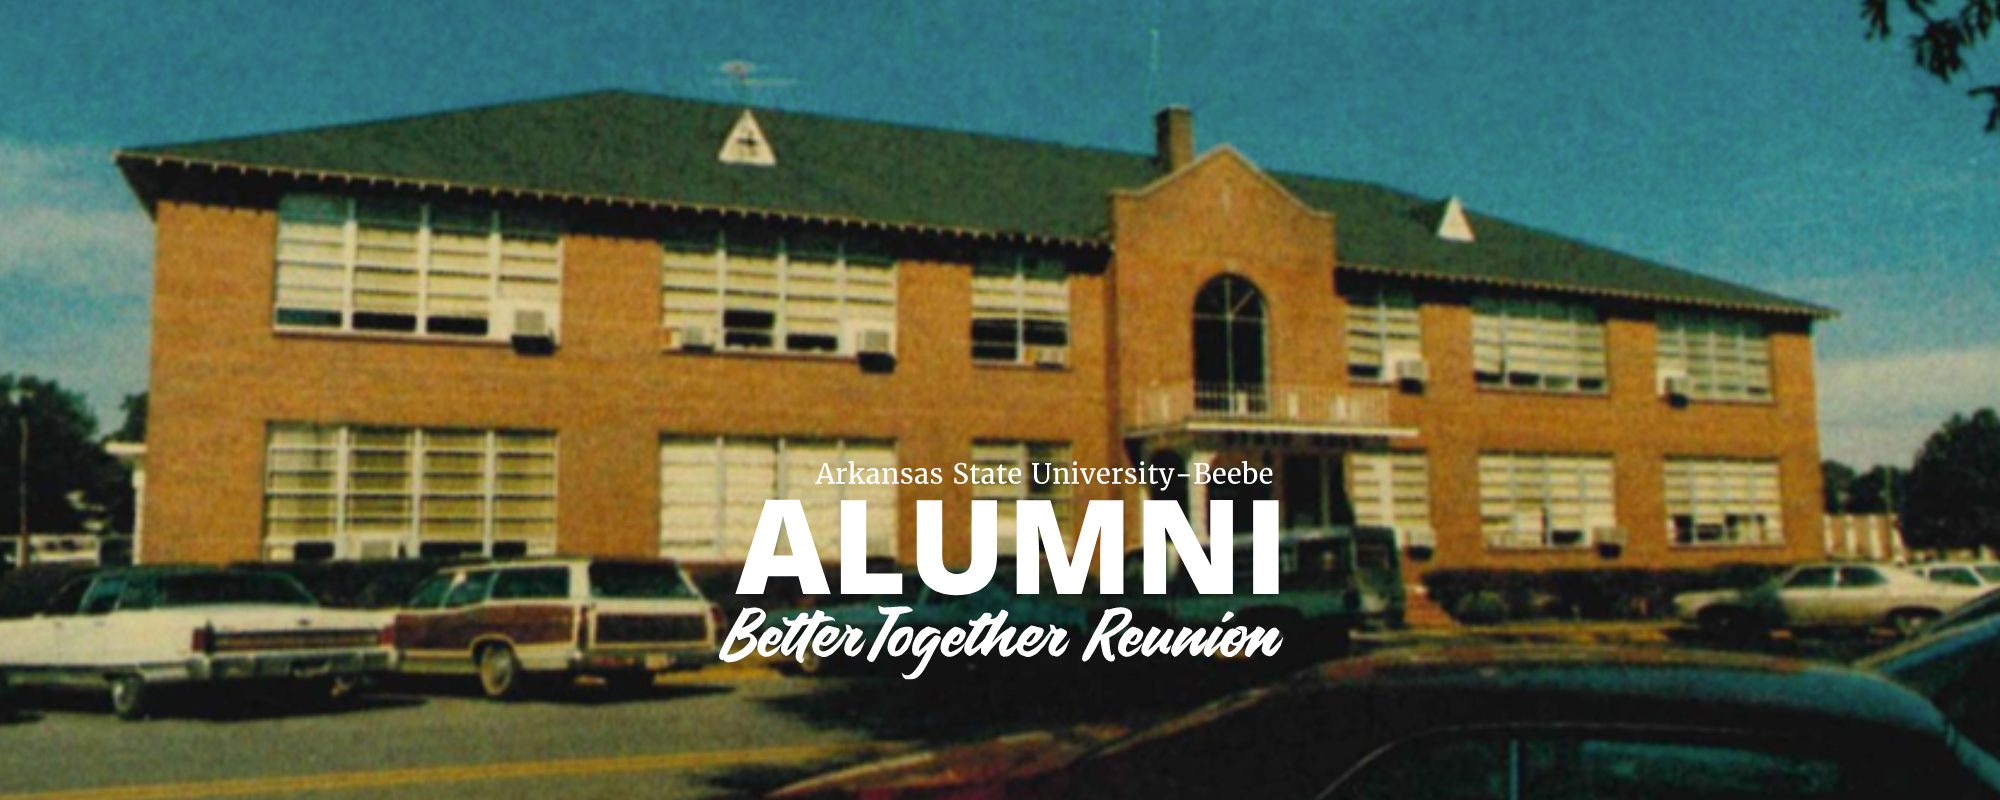 Alumni Reunion | Sept. 21-23